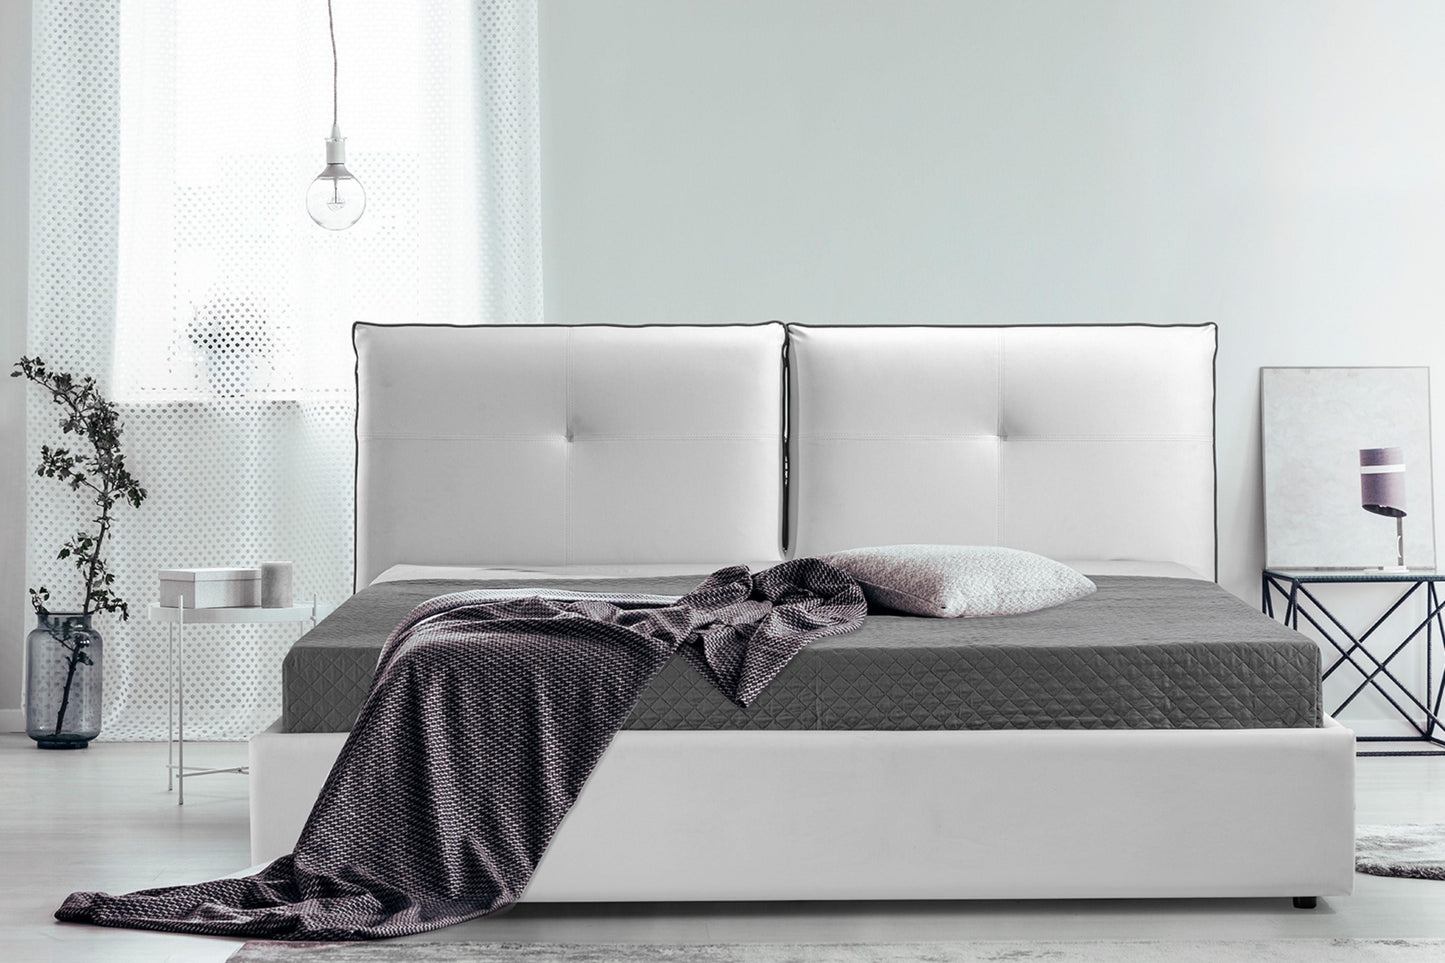 Aria Queen and King Bed Model CB-A102 - Venini Furniture 